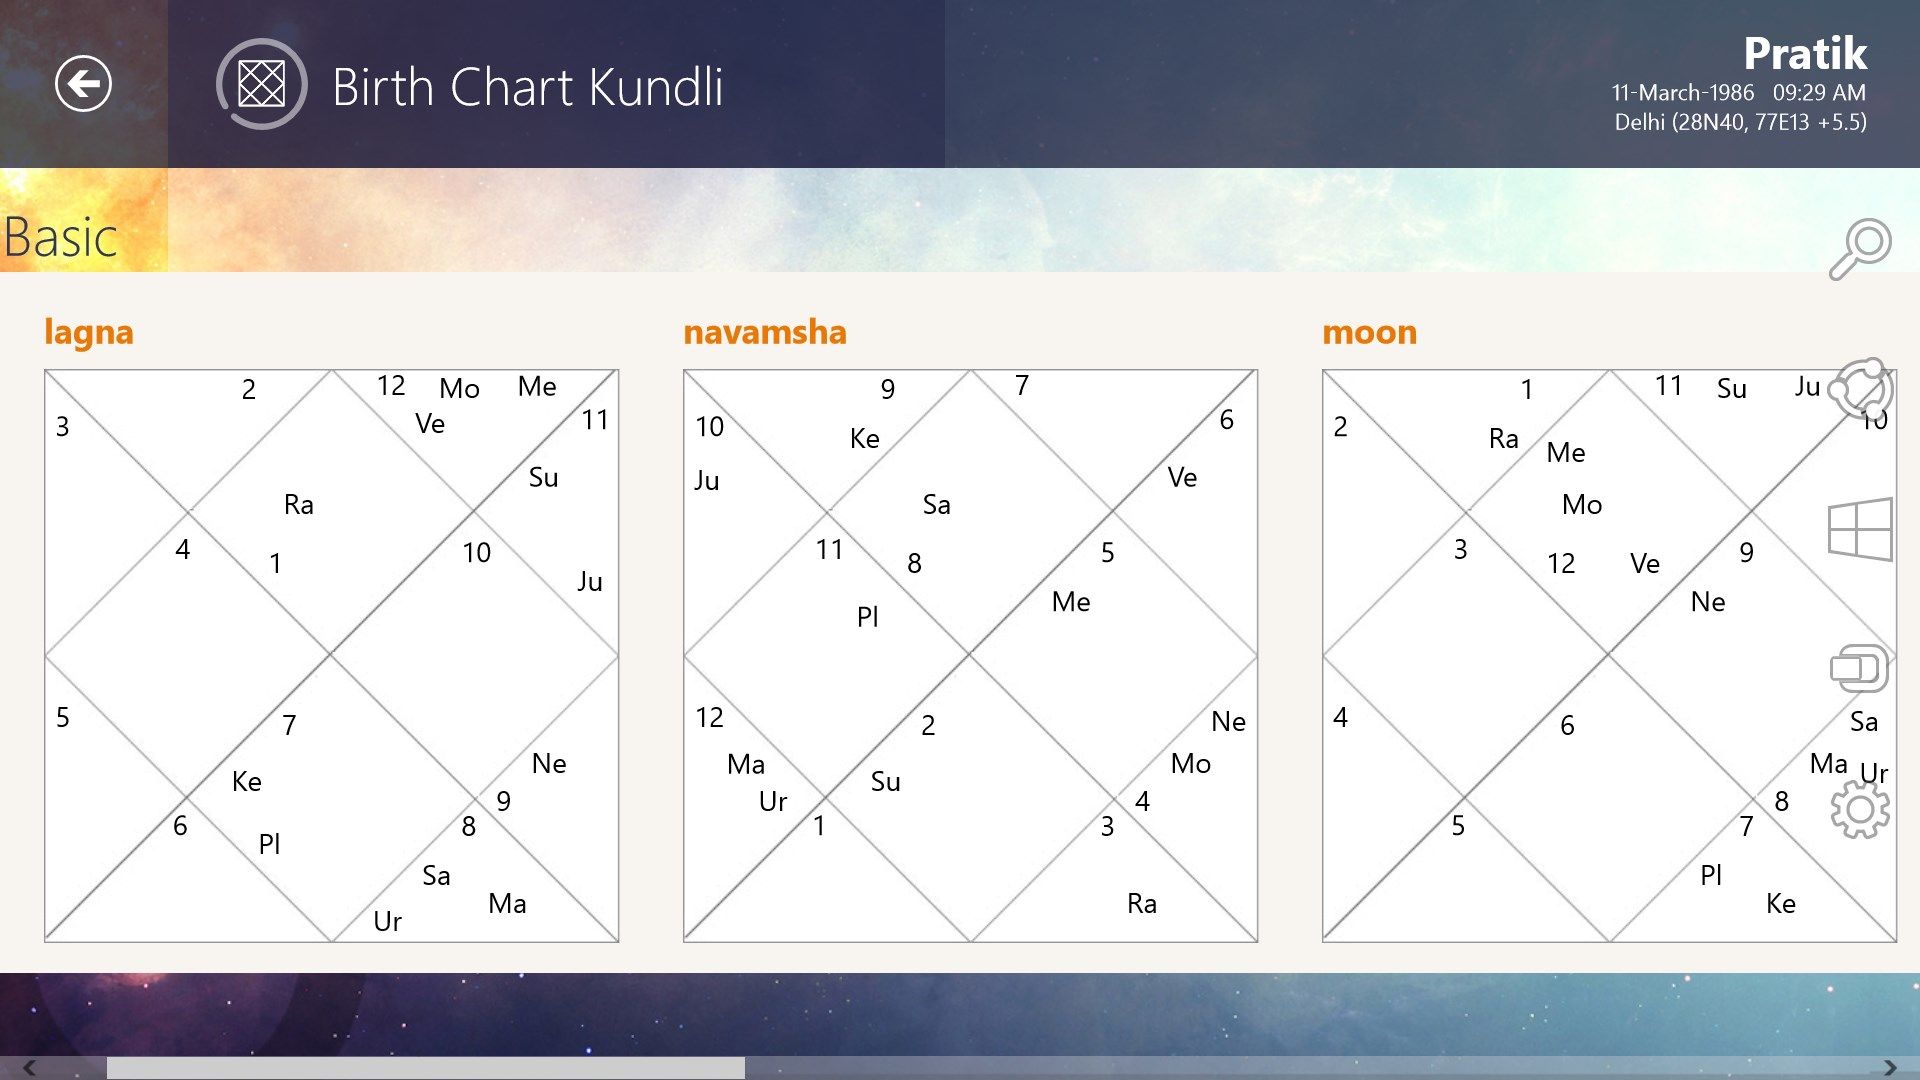 Lagna chart, Moon chart and Navamsa chart in North Indian format.